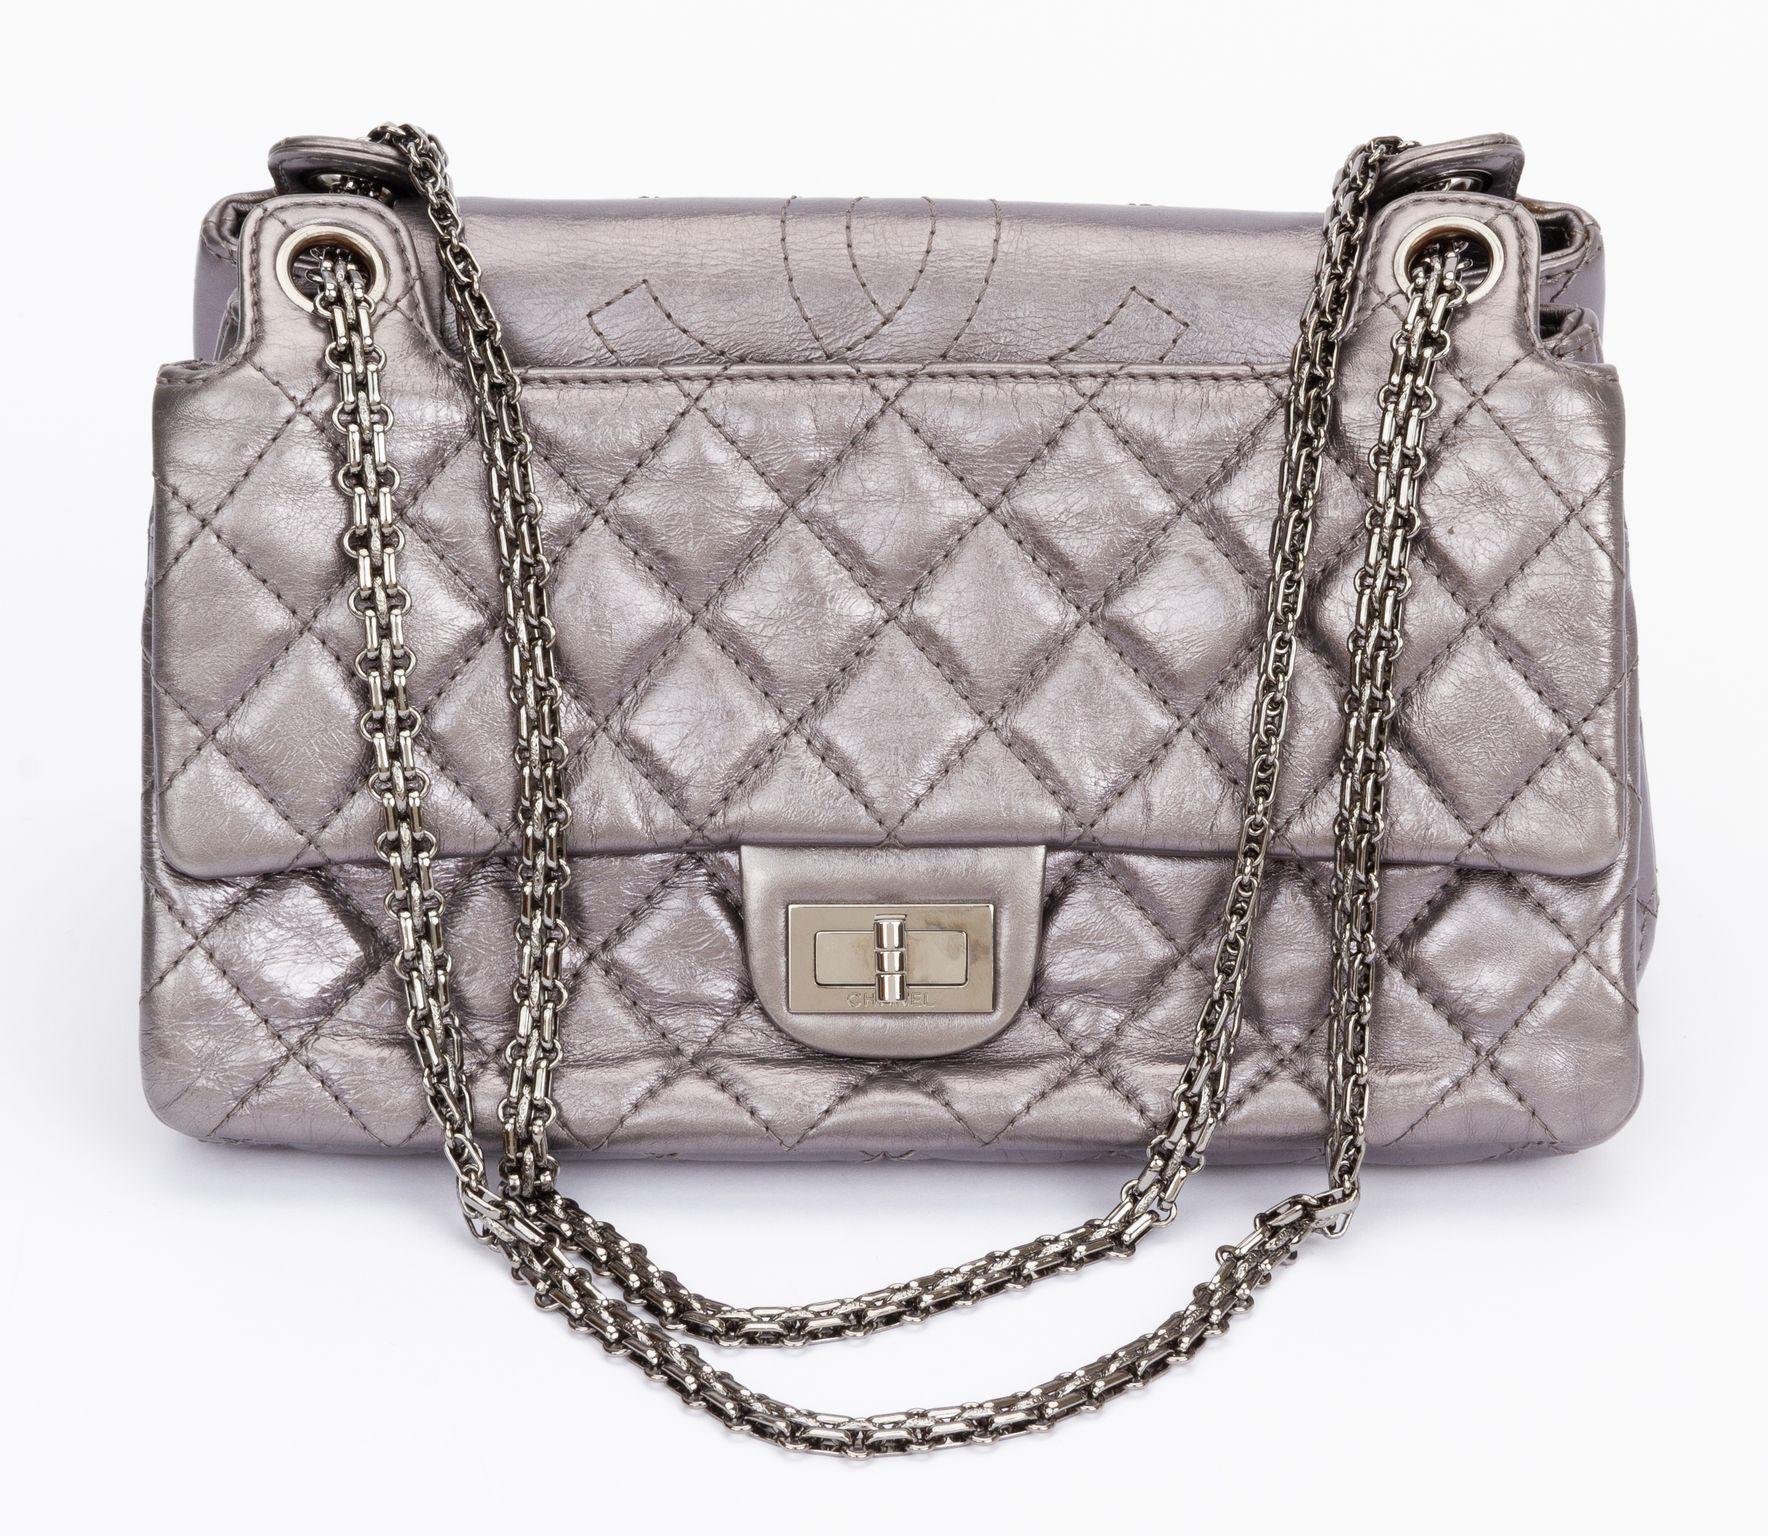 Chanel Reissue Accordian Bag Metallic 1